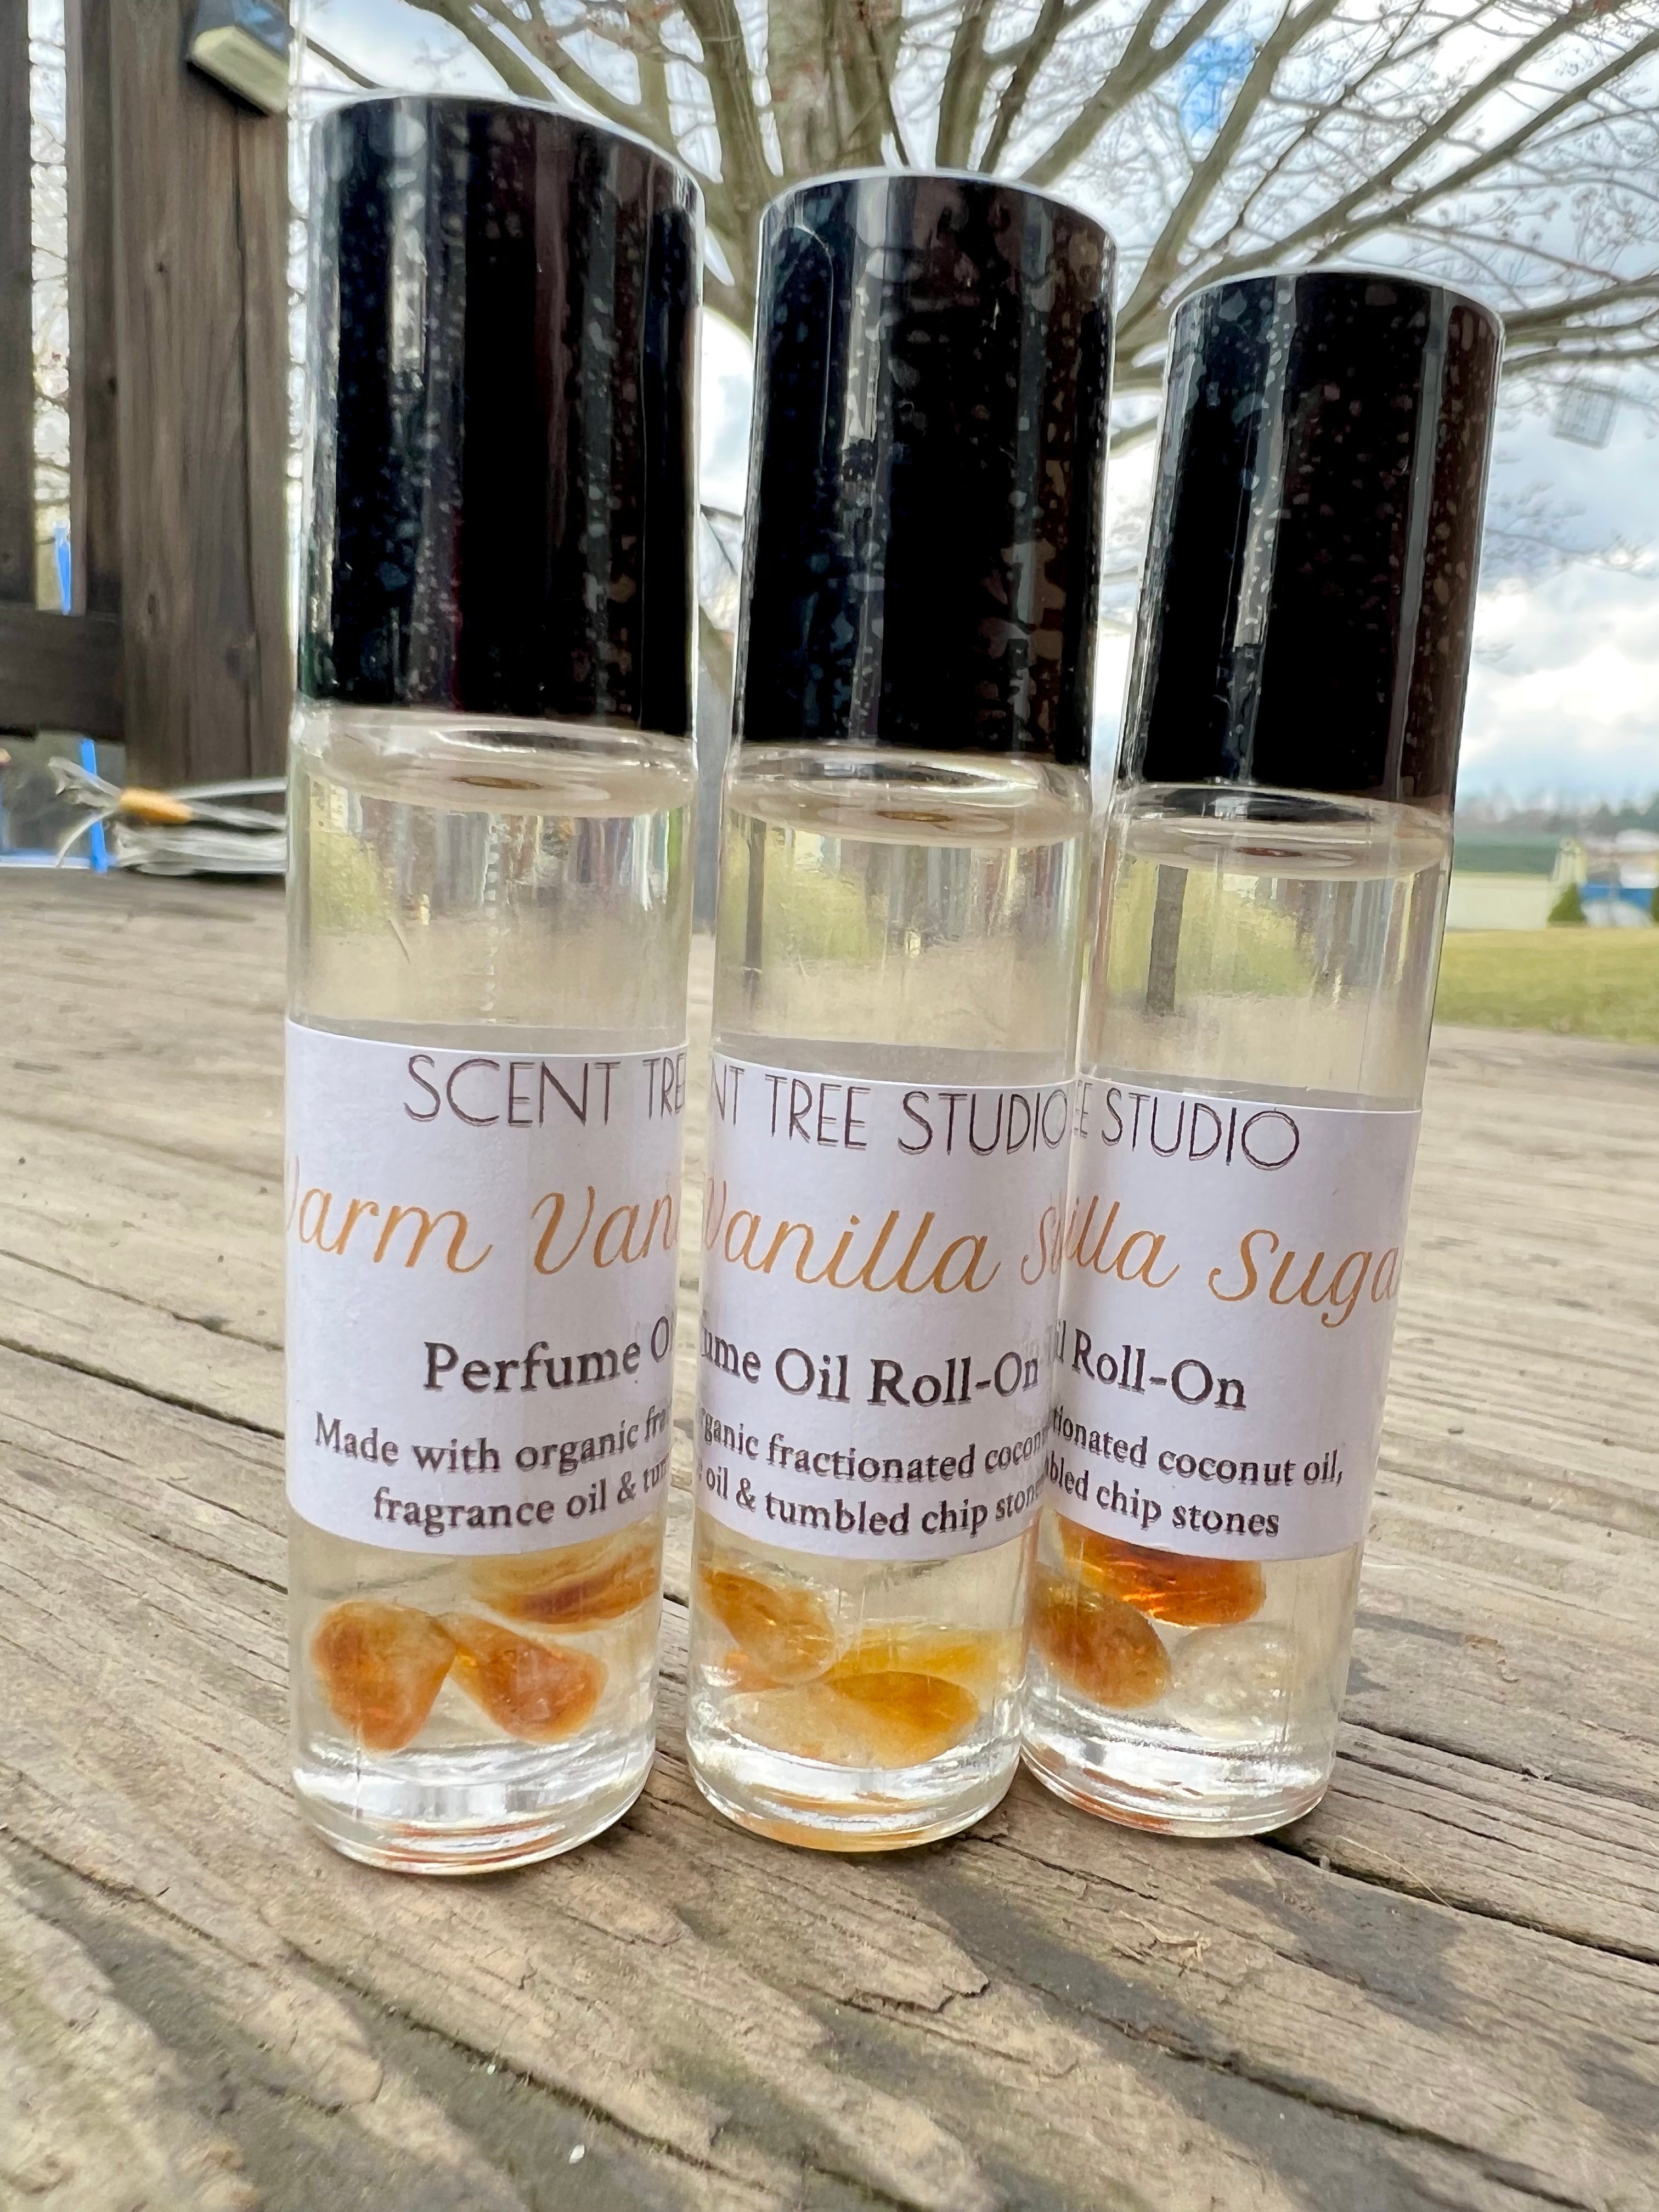 Lovespell type Luxury Perfume Oil Roll on Fragrance Oils Handmade Natural  Ingredients 